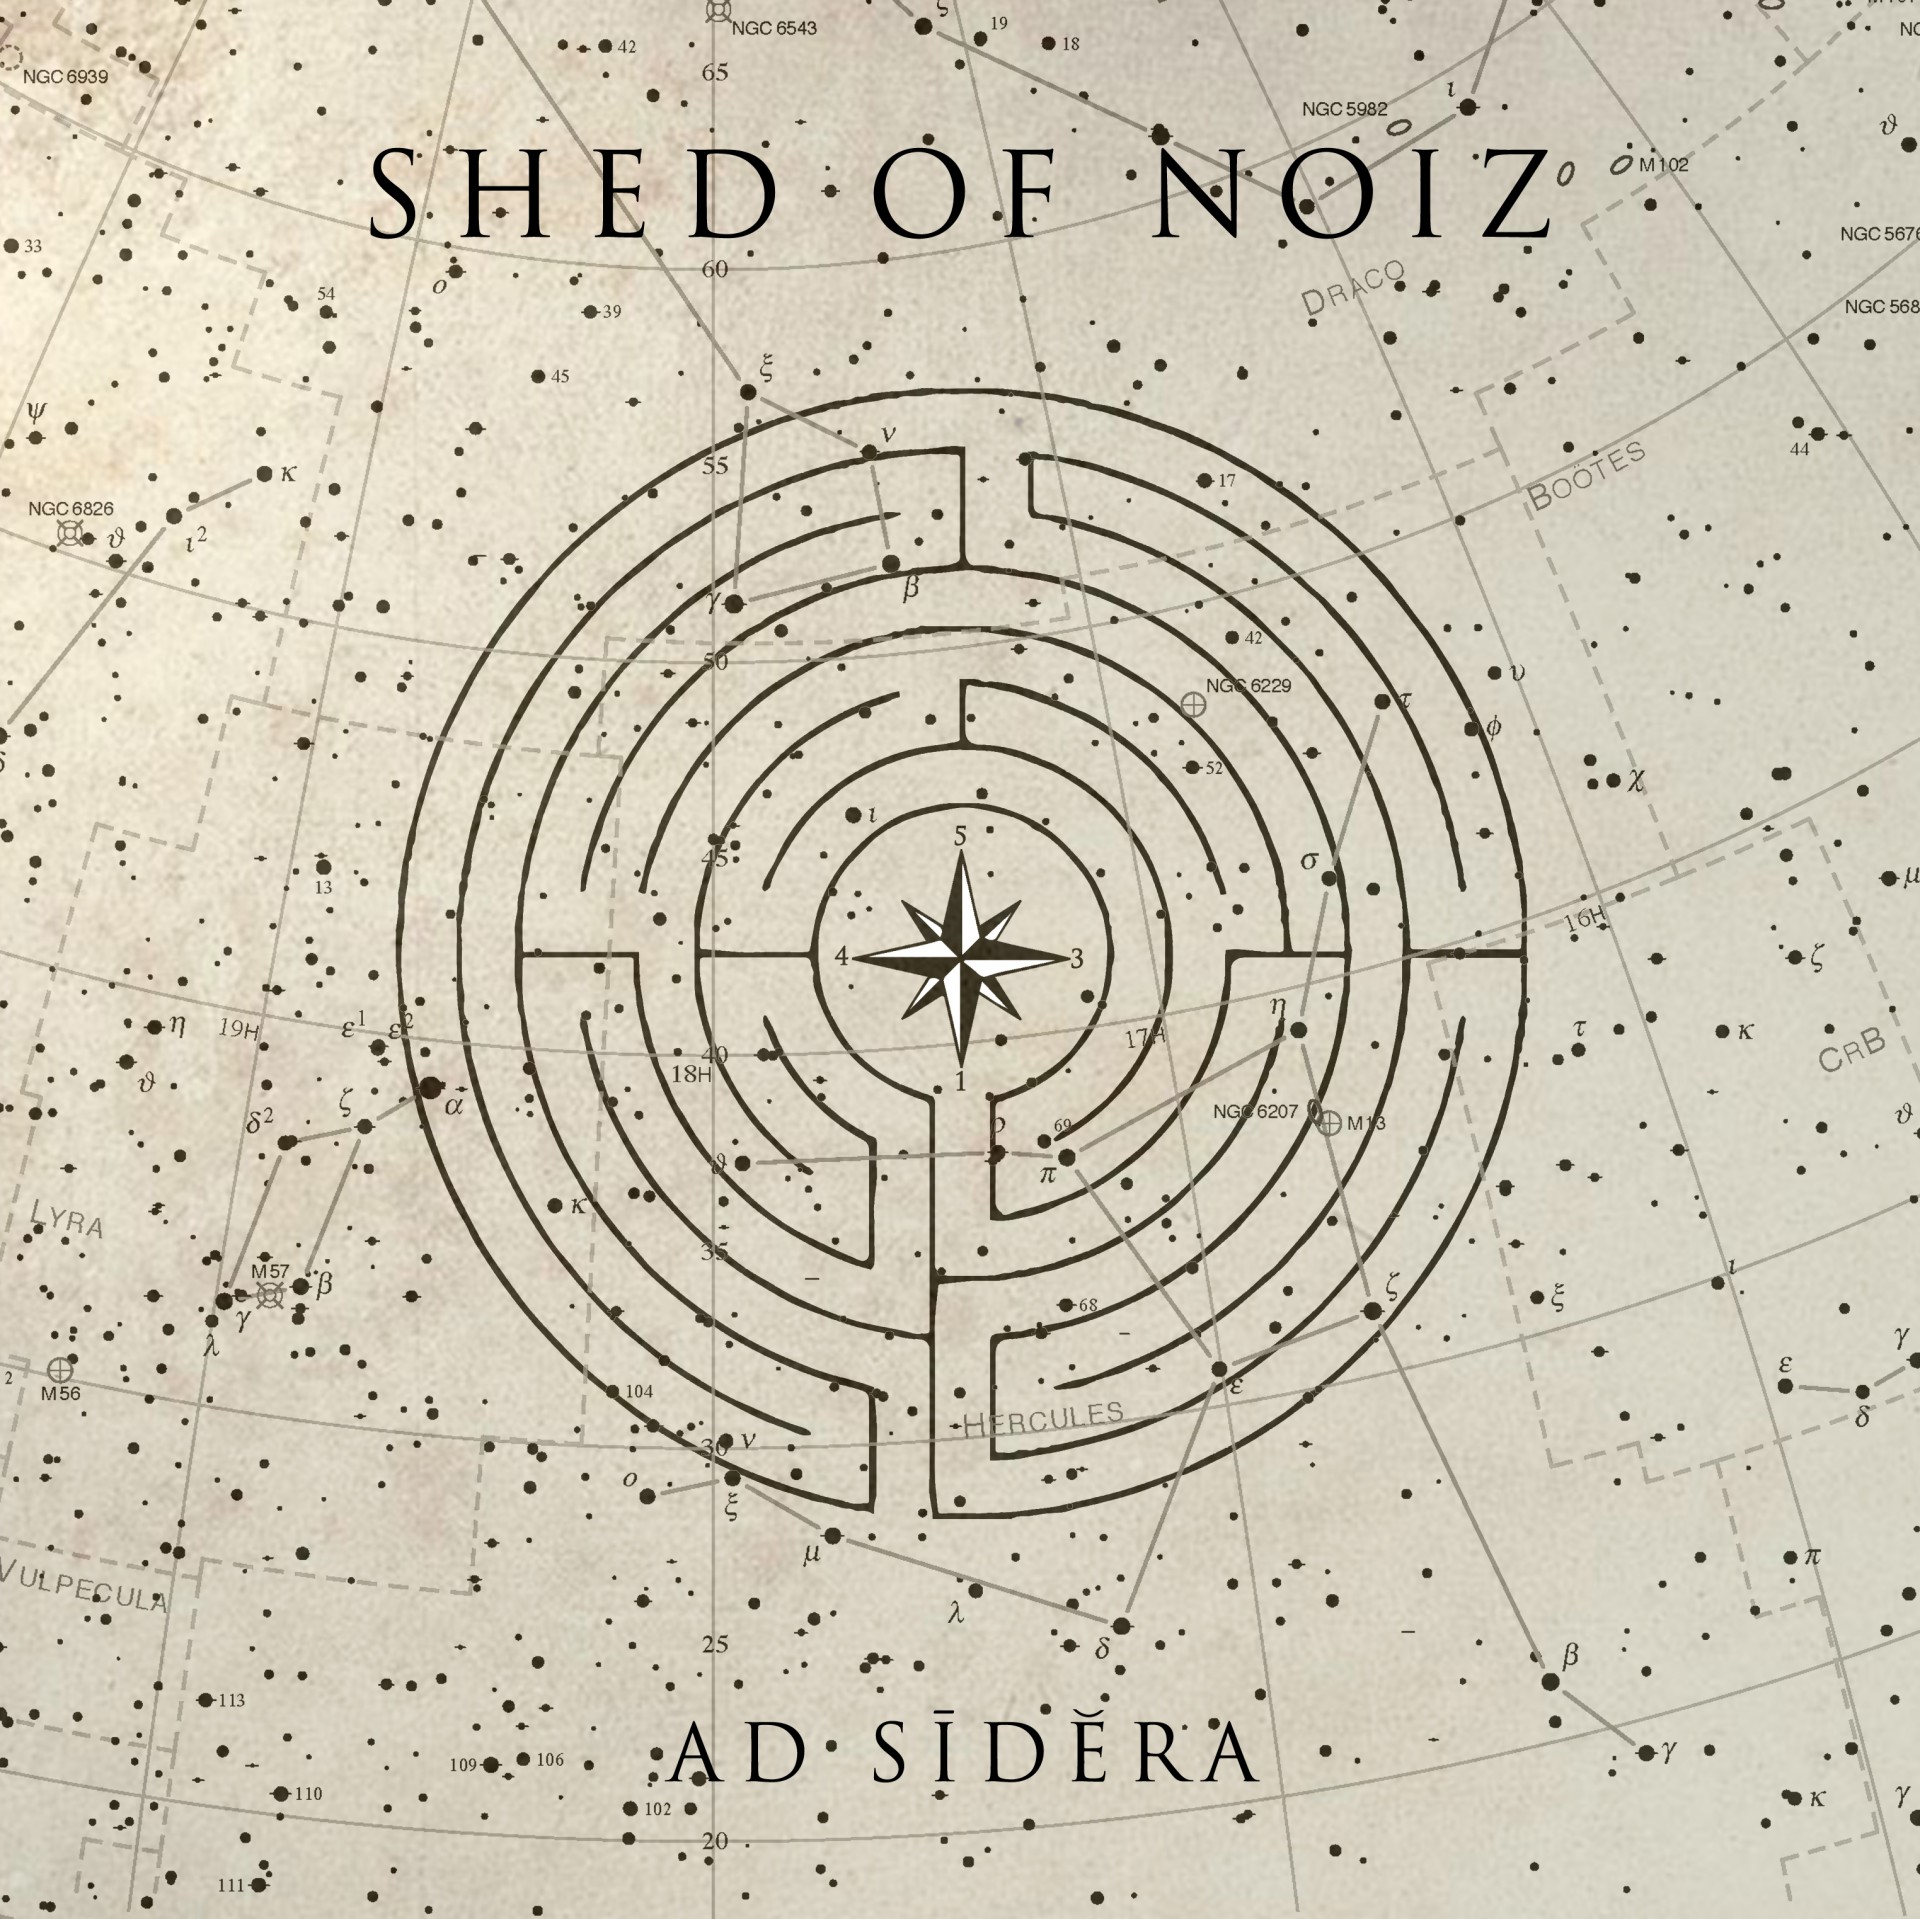 Shed Of Noize- Ad sidera